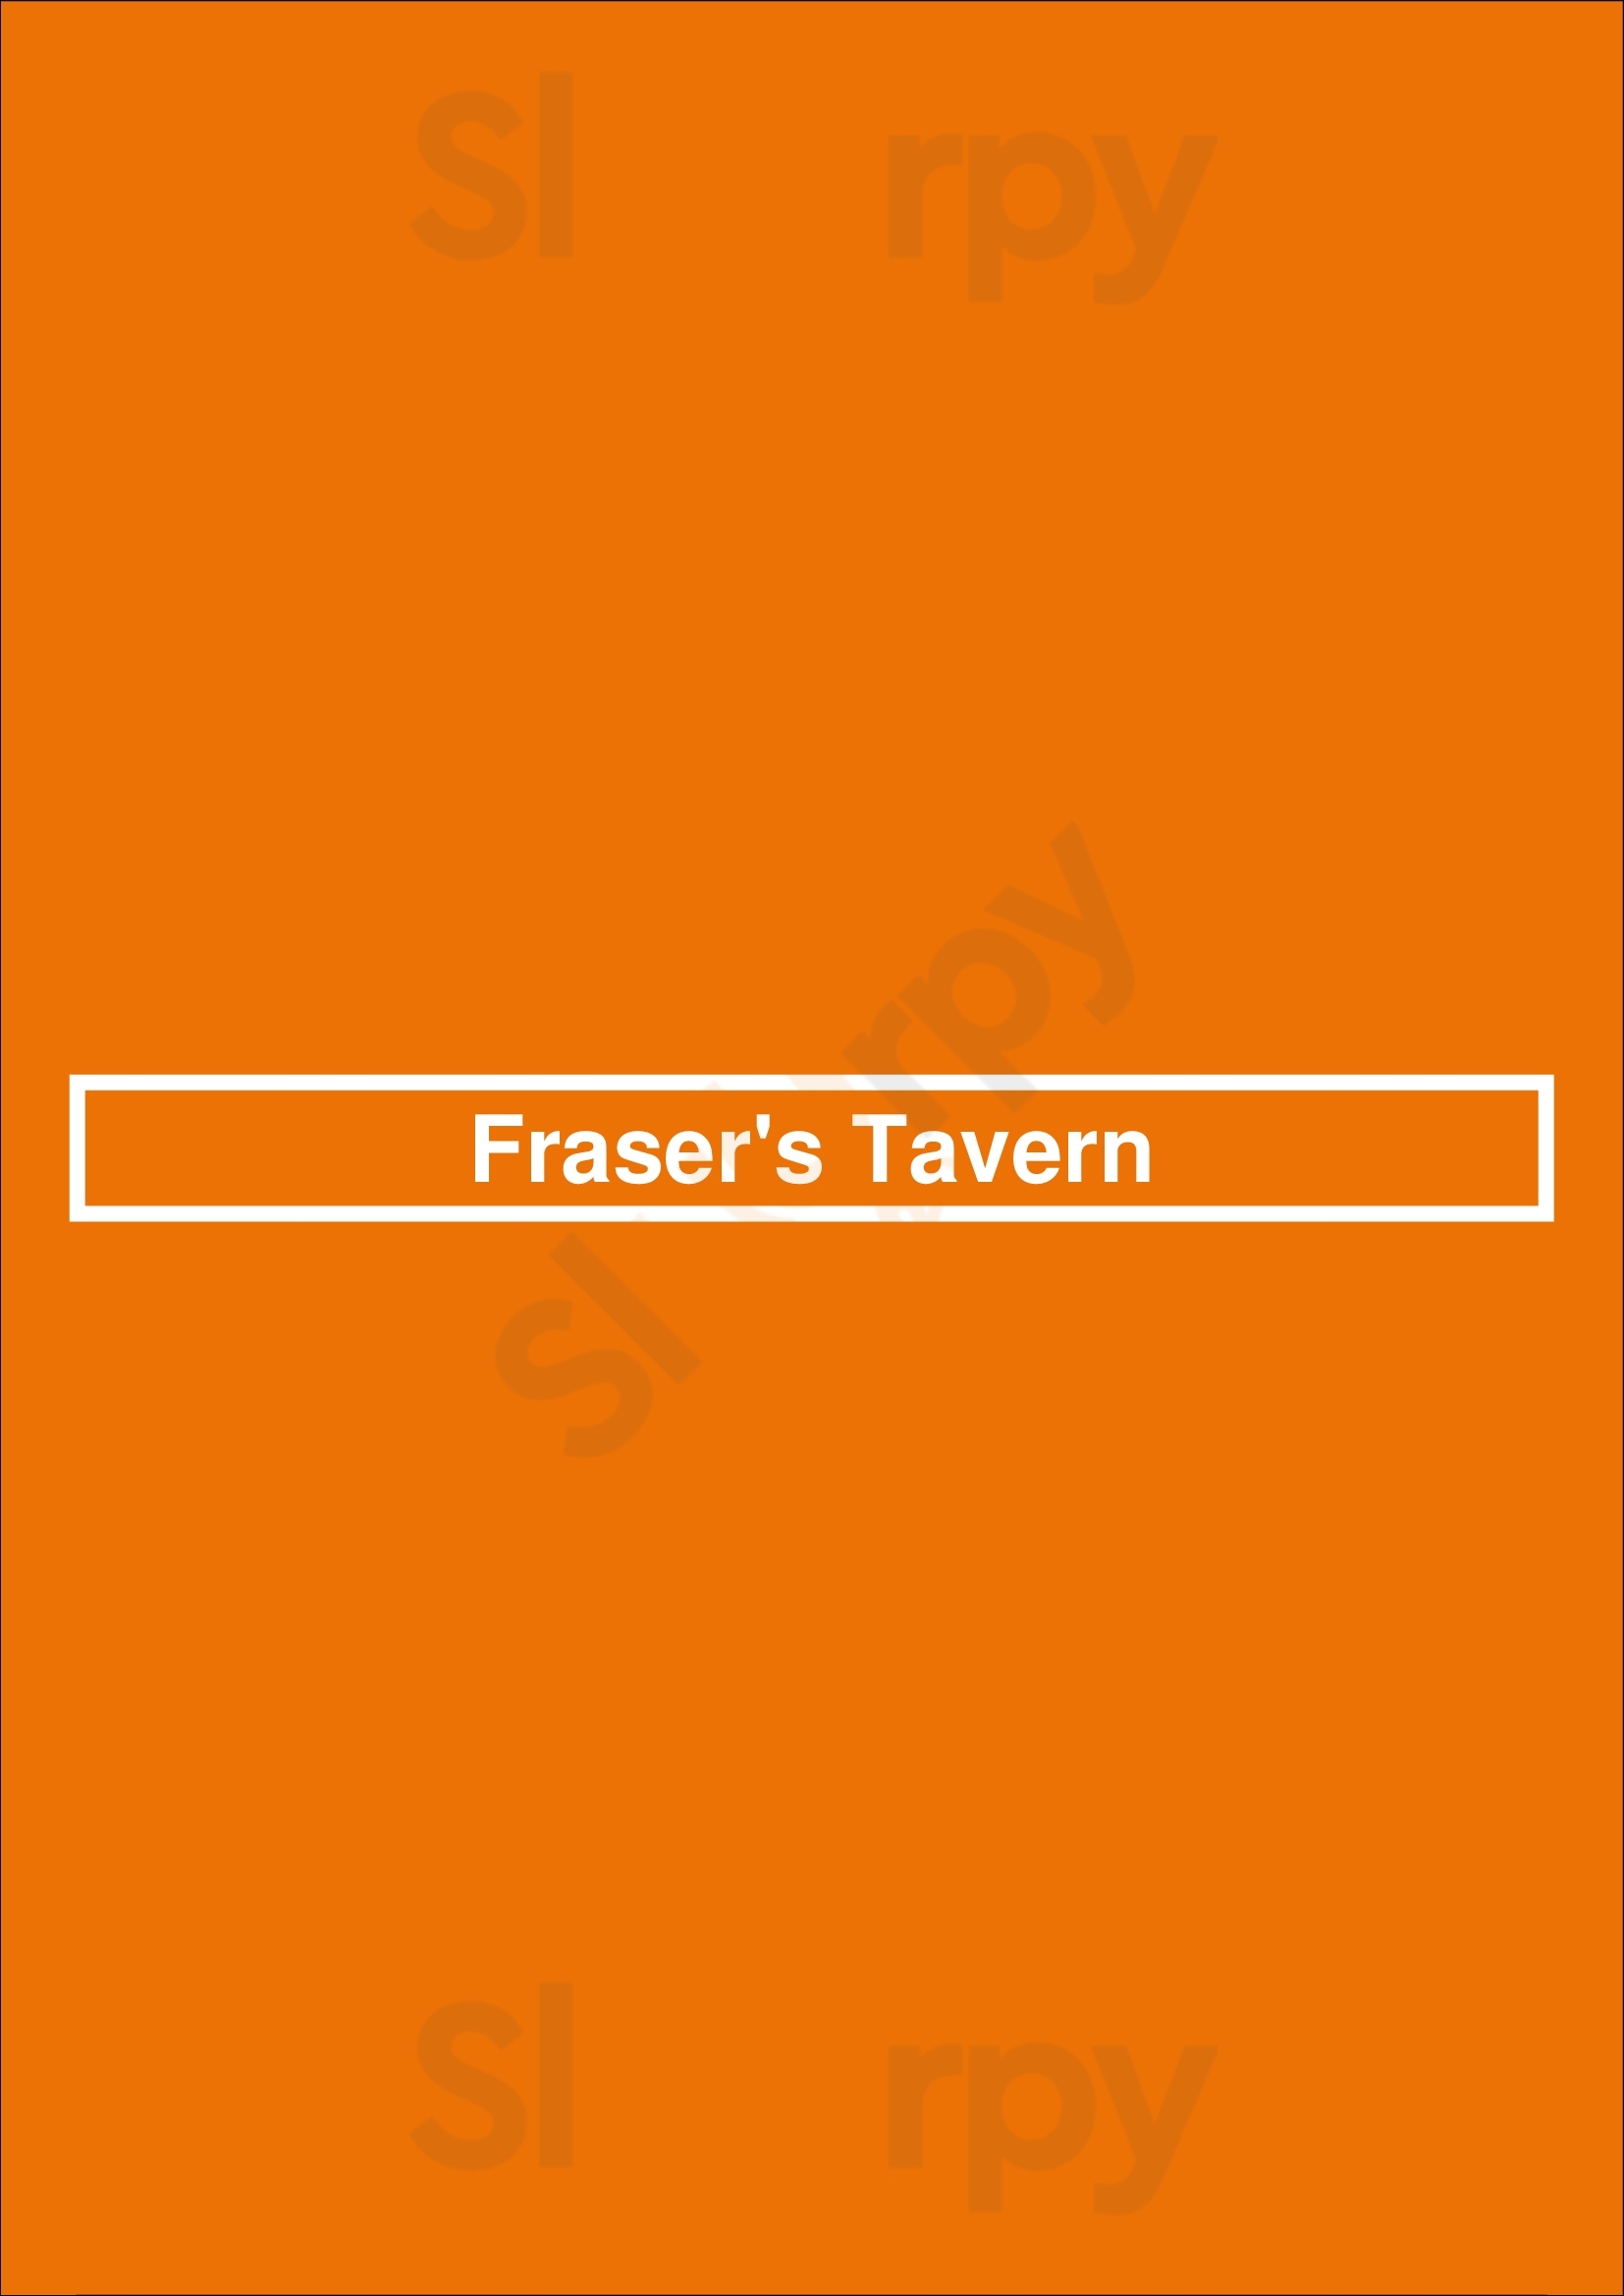 Fraser's Tavern Hilton Head Menu - 1